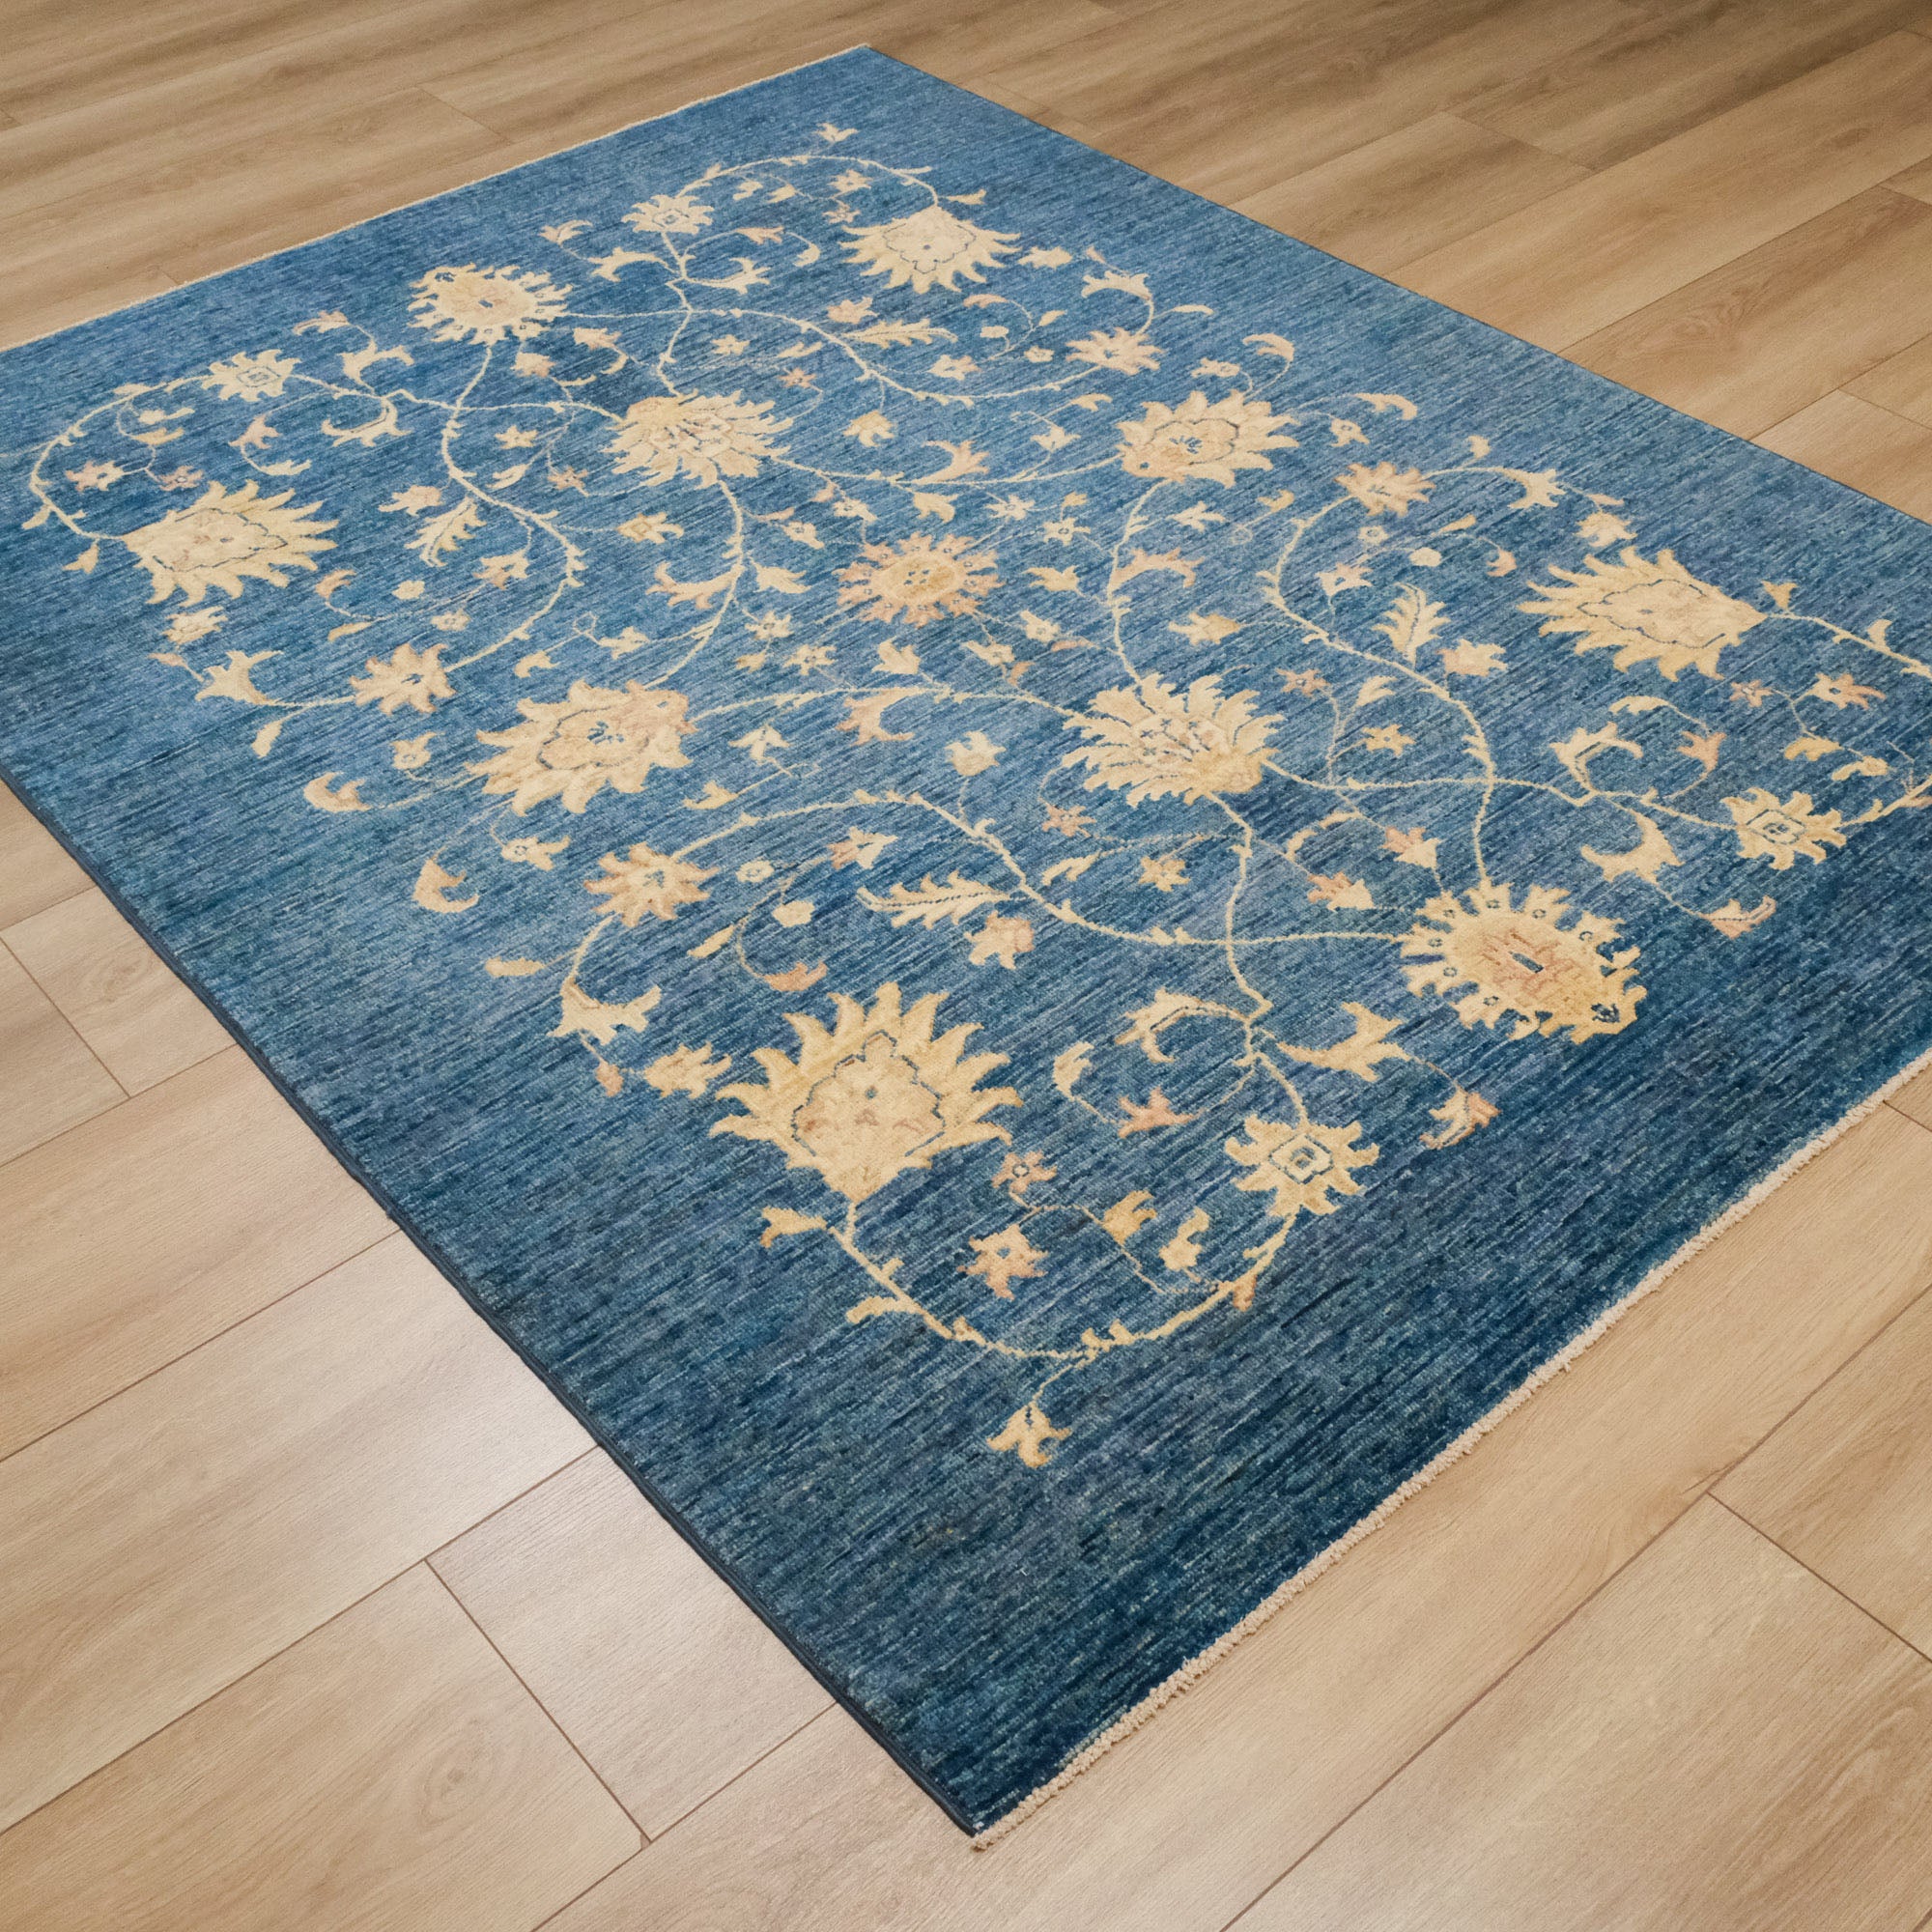 Hand-Woven Flower Patterned Blue Wool Carpet